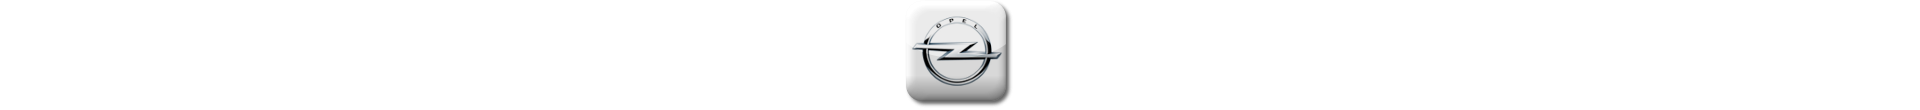 Boitier additionnel Opel Diesel Evolussem